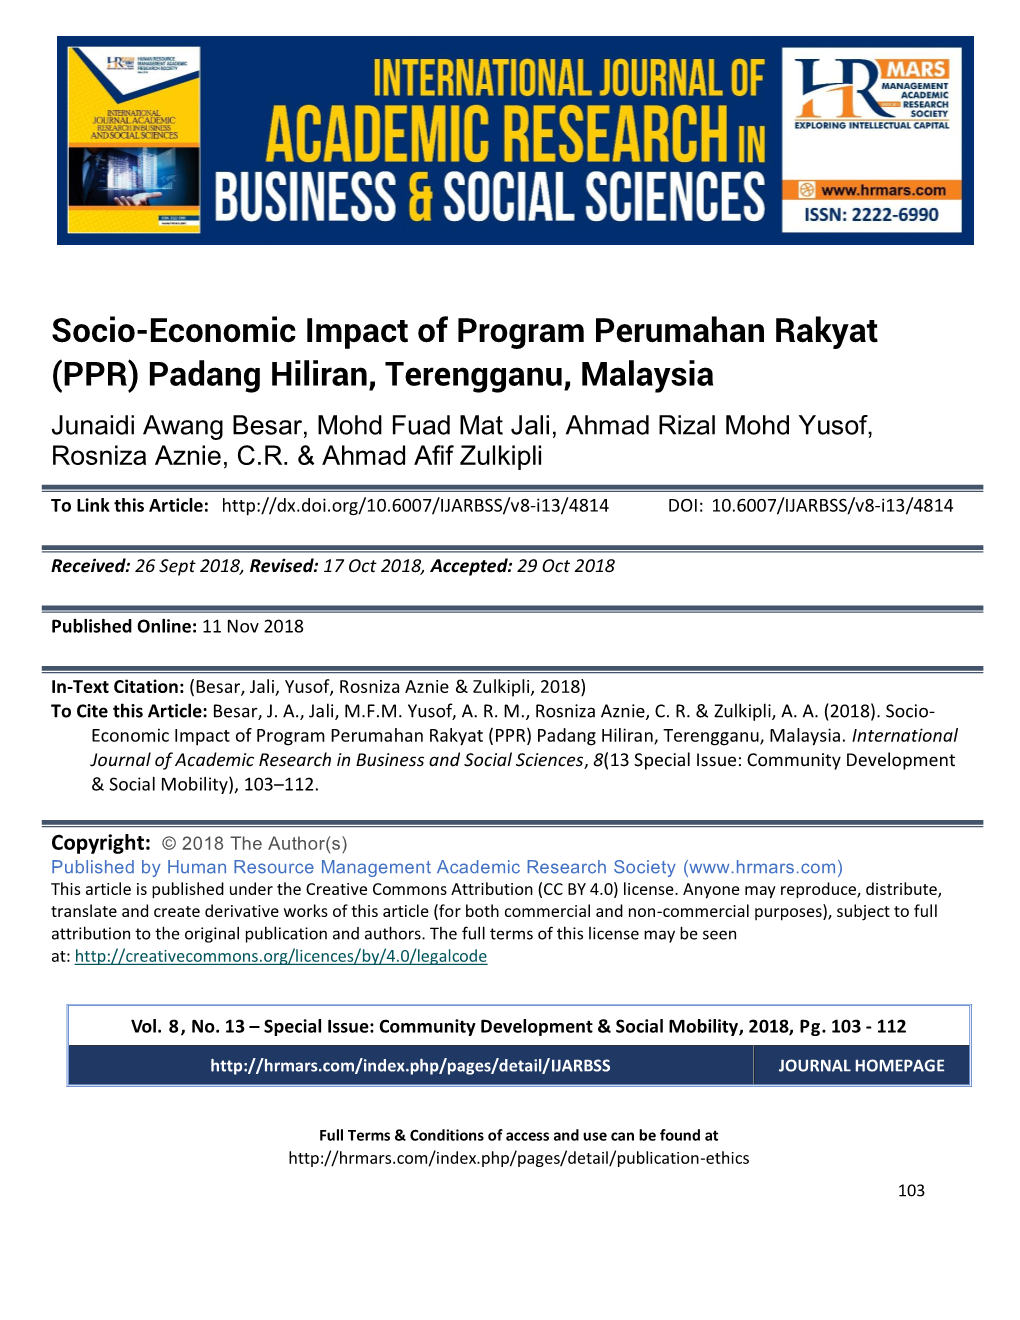 Socio-Economic Impact of Program Perumahan Rakyat (PPR) Padang Hiliran, Terengganu, Malaysia